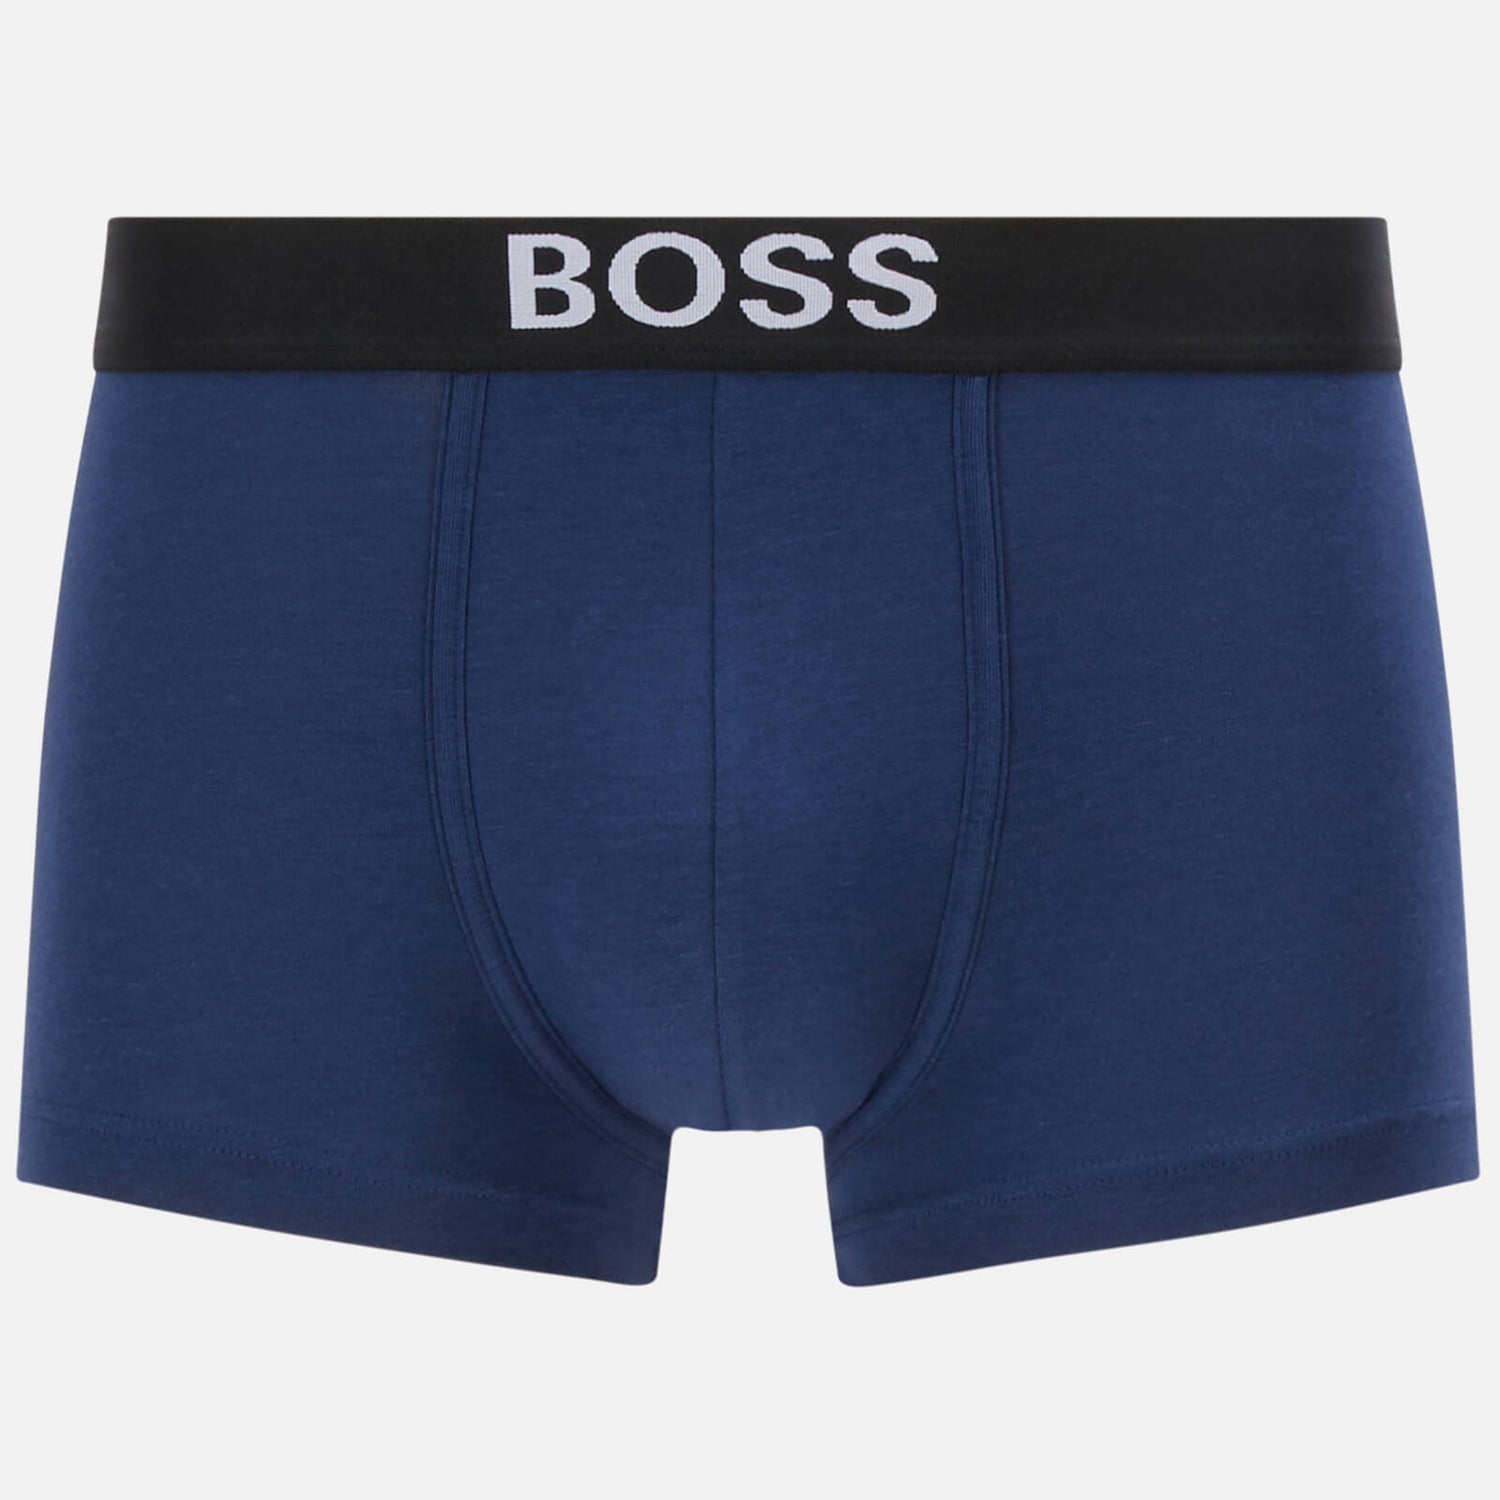 BOSS Bodywear Men's Identity Trunk Boxer Shorts - Medium Blue - S